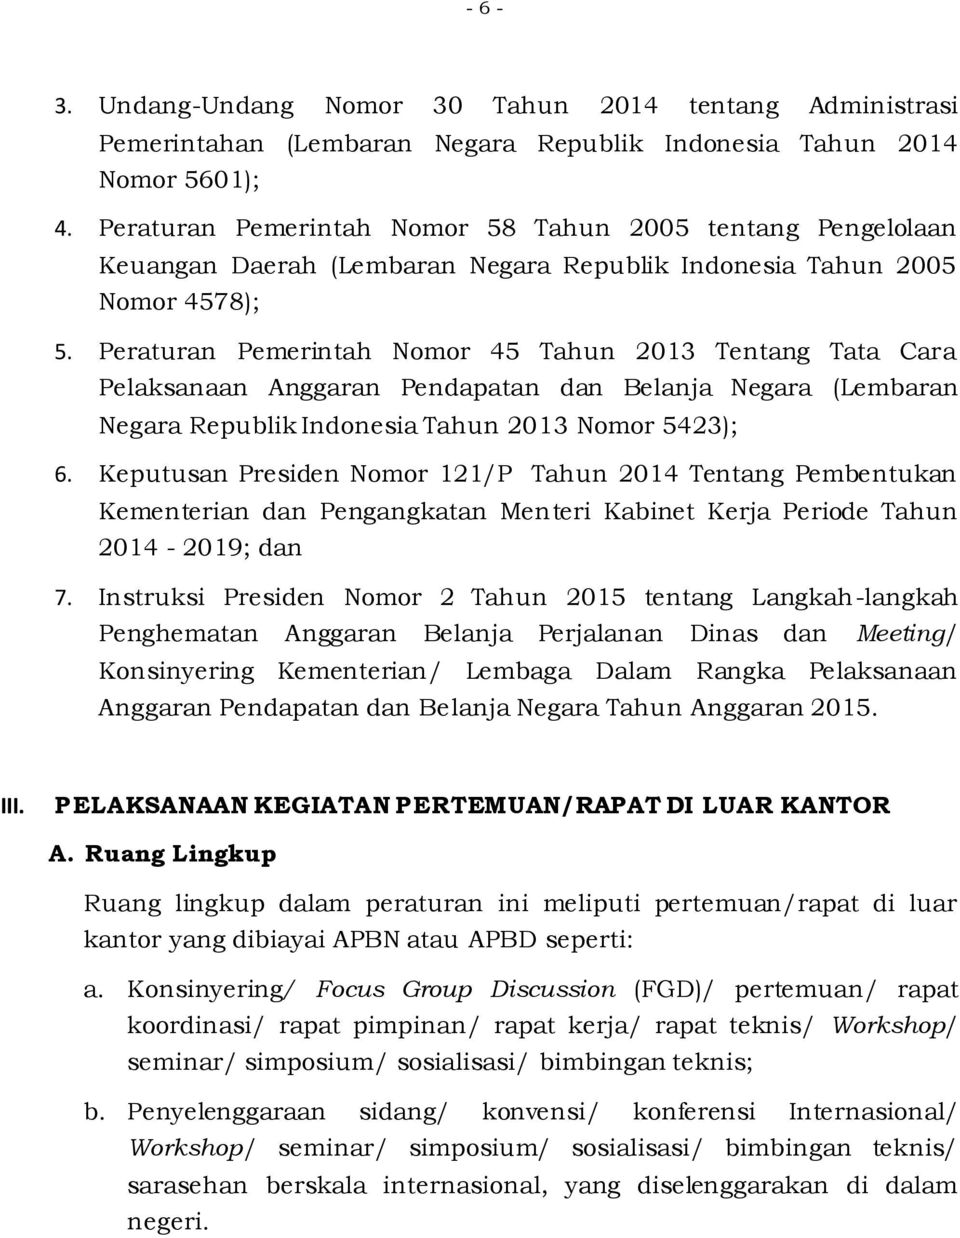 Peraturan Pemerintah Nomor 45 Tahun 2013 Tentang Tata Cara Pelaksanaan Anggaran Pendapatan dan Belanja Negara (Lembaran Negara Republik Indonesia Tahun 2013 Nomor 5423); 6.